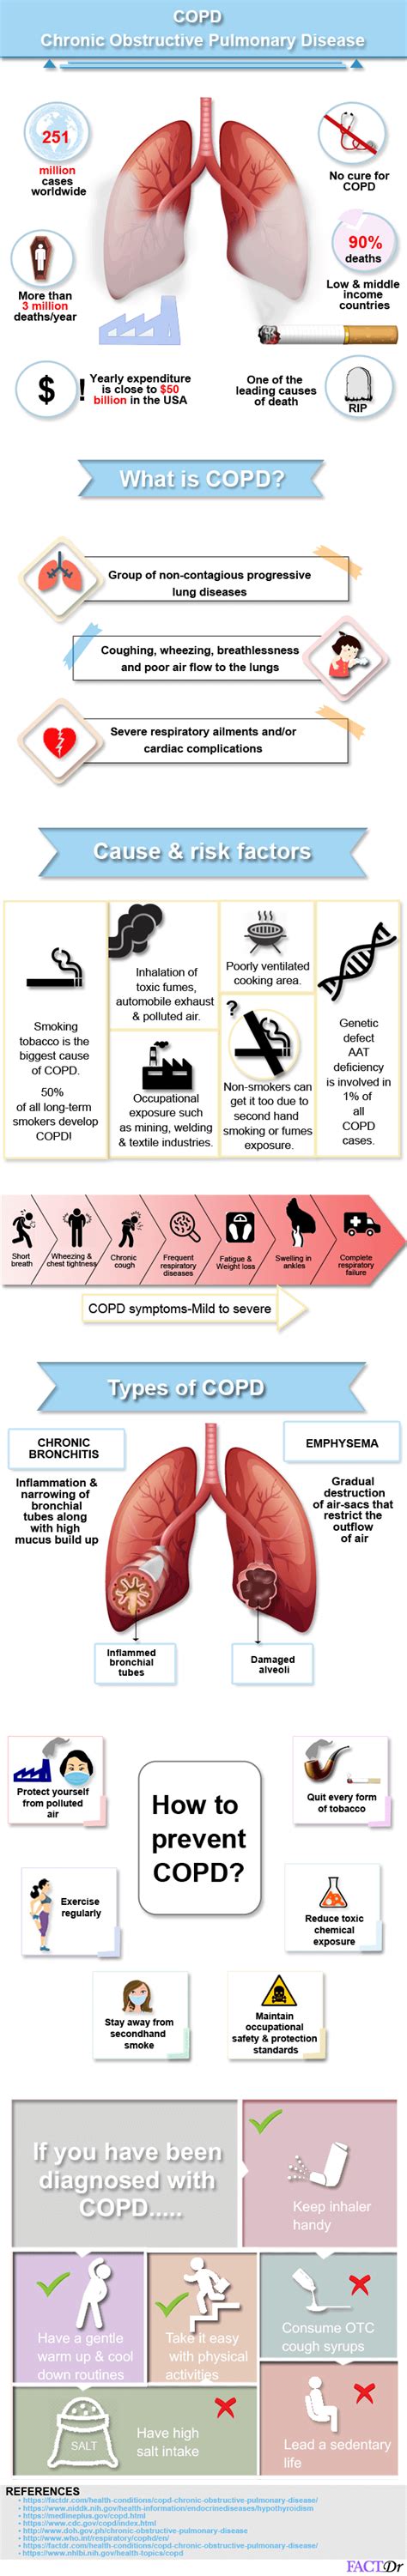 Copd Symptoms Stages